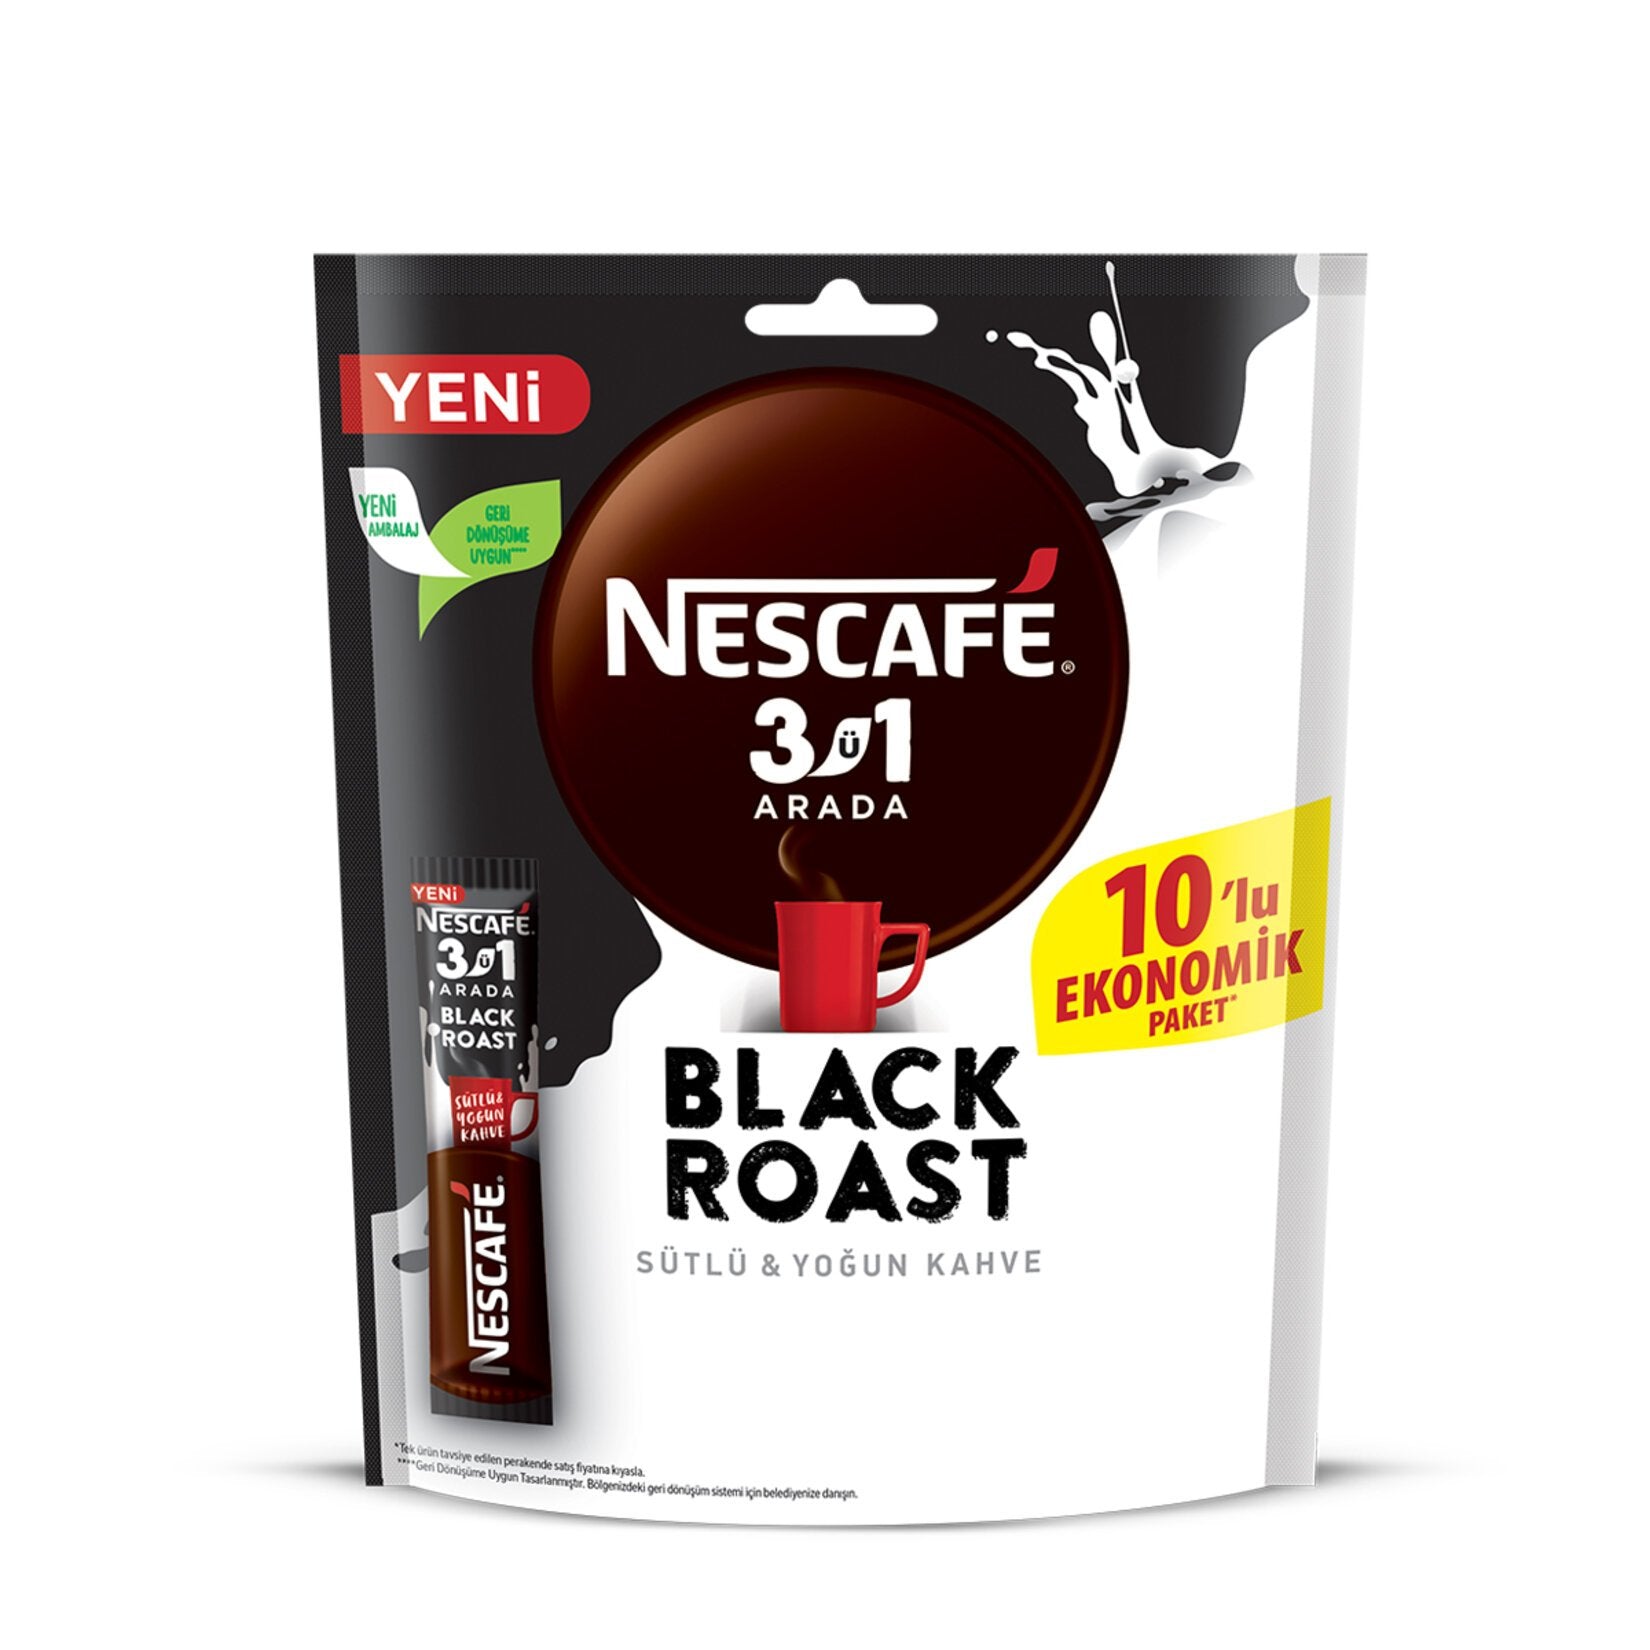 Nescafe 3 in 1 Black Roast 15 G * Pack of 10 SF Traders